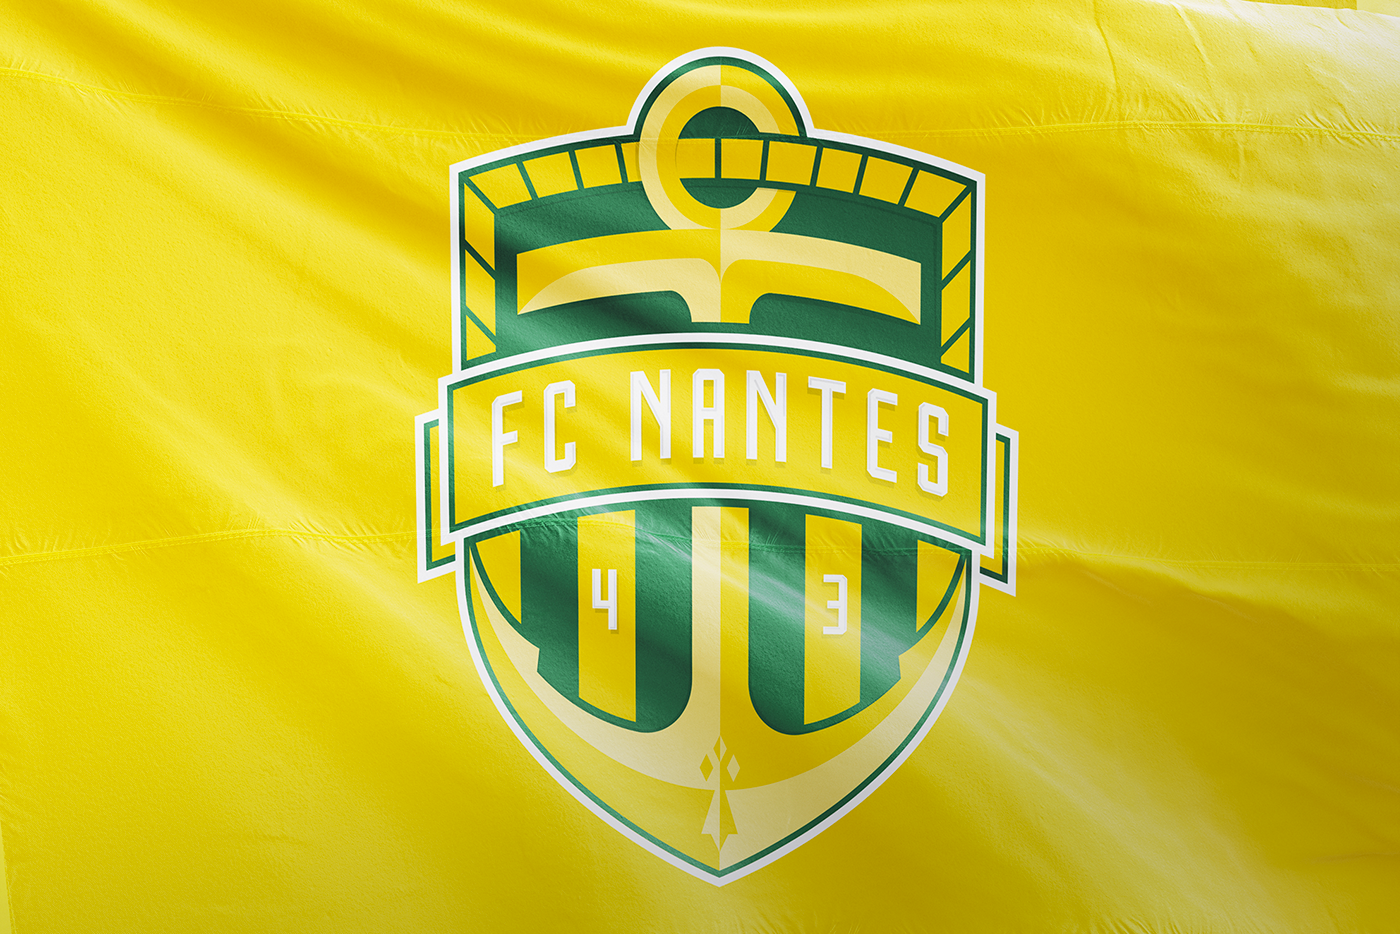 fc nantes club france Ligue 1 Rebrand brand soccer football logo sport